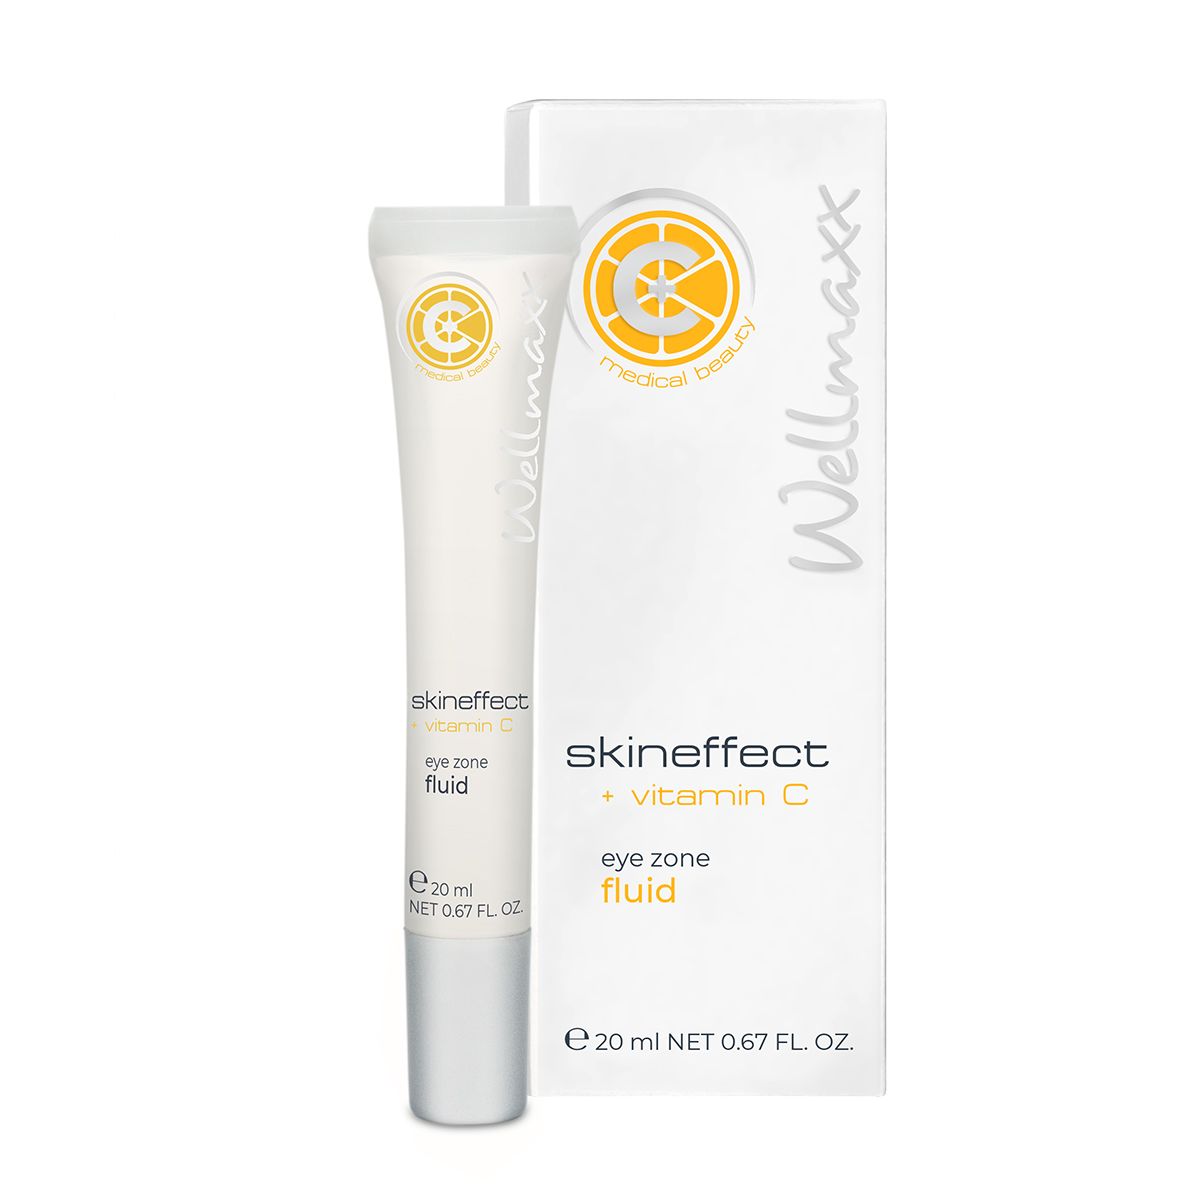 skineffect + vitamin C eye zone fluid